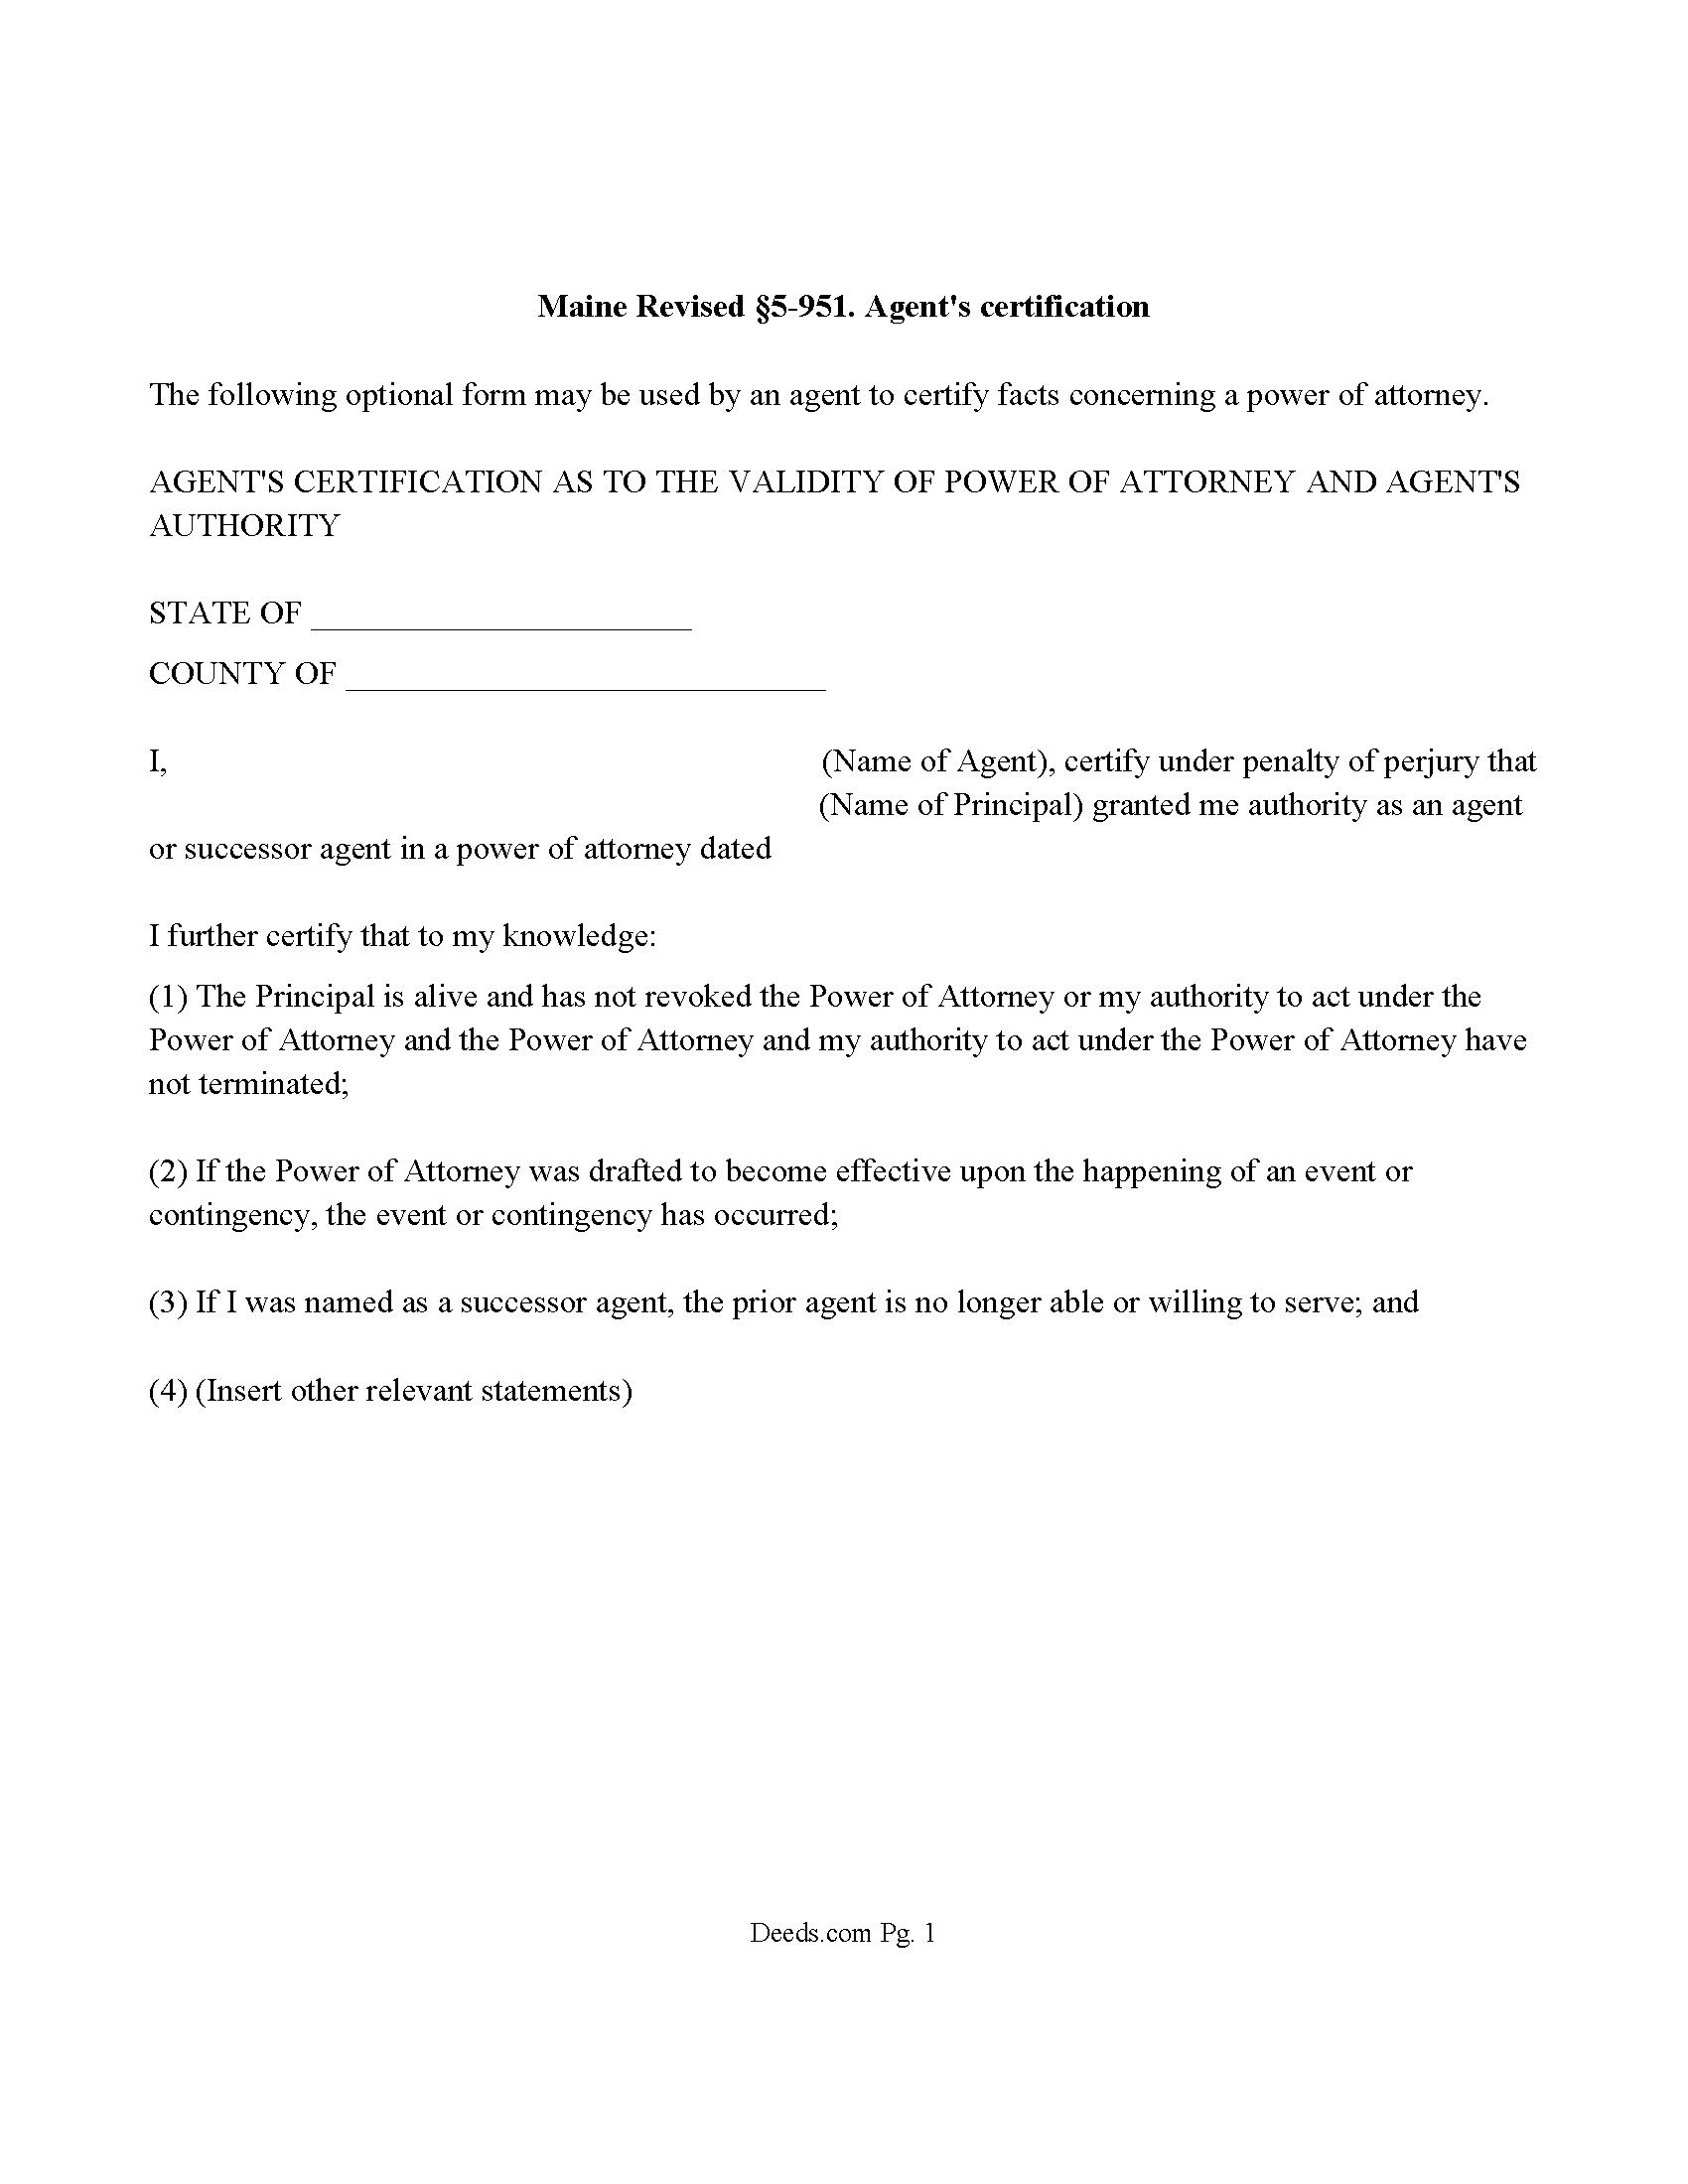 Agents Certification Form Â§5-951